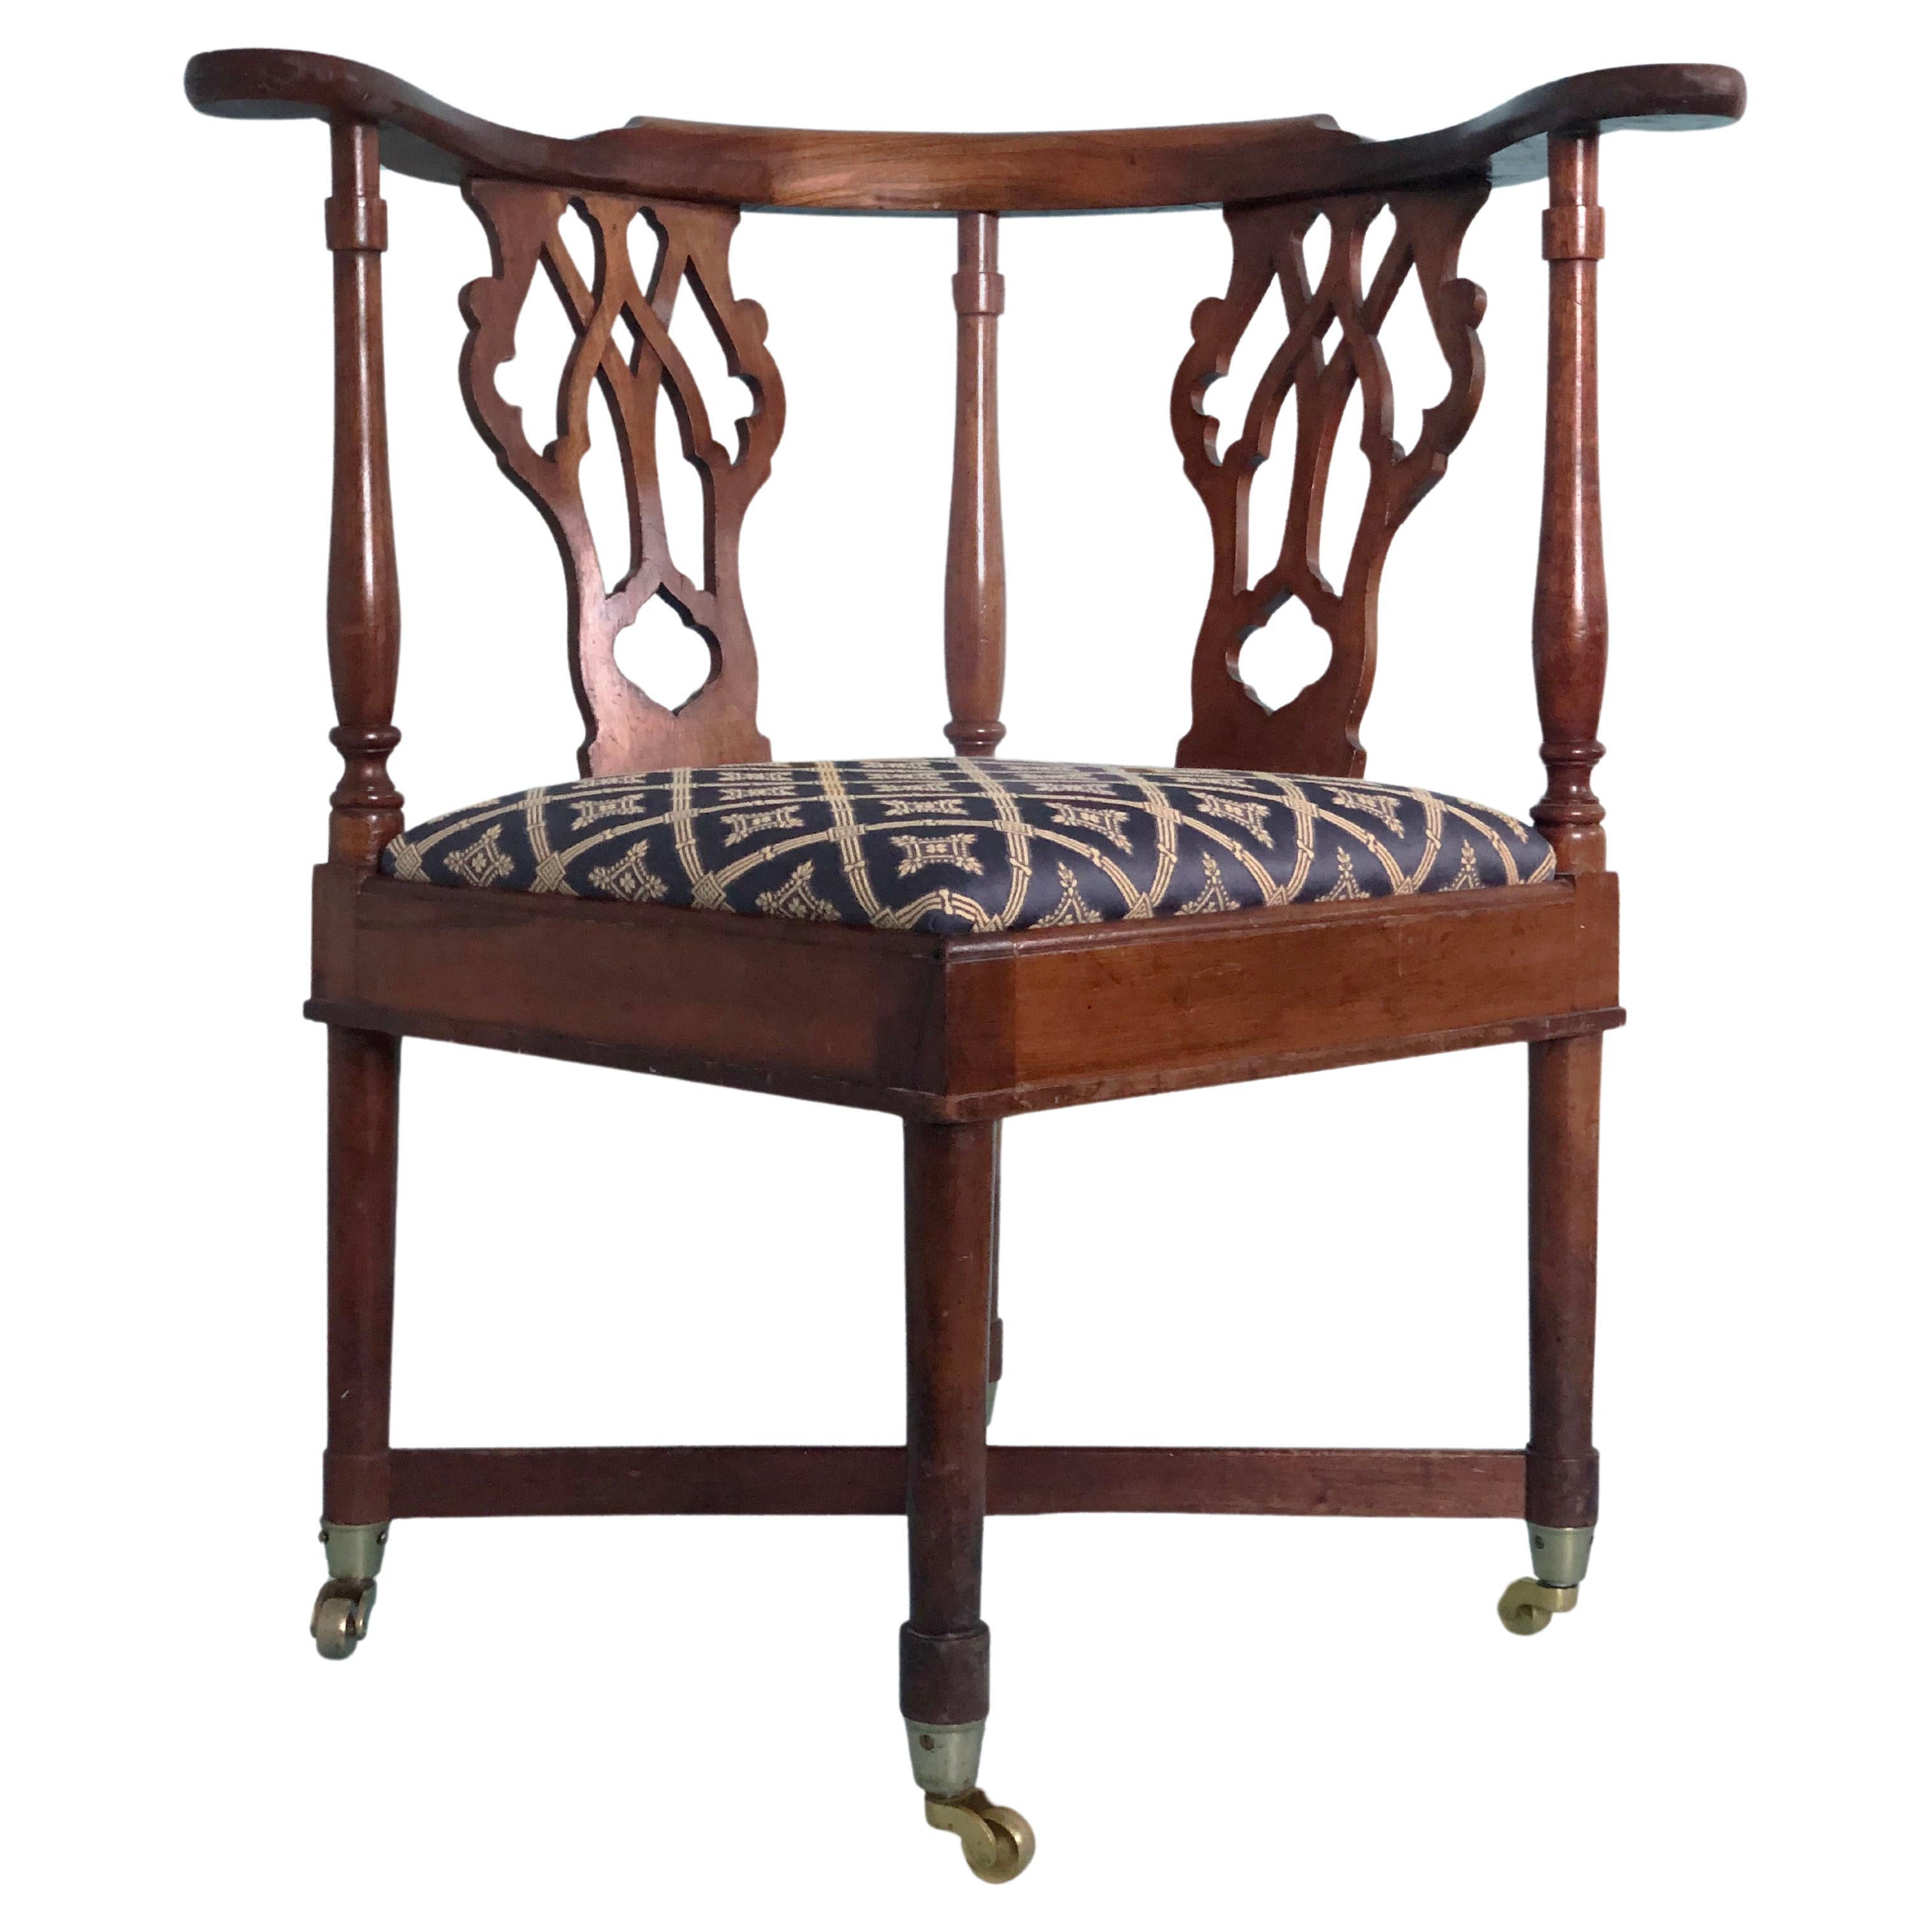 Georgian Mahogany Corner Chair on Wheels 19th Century